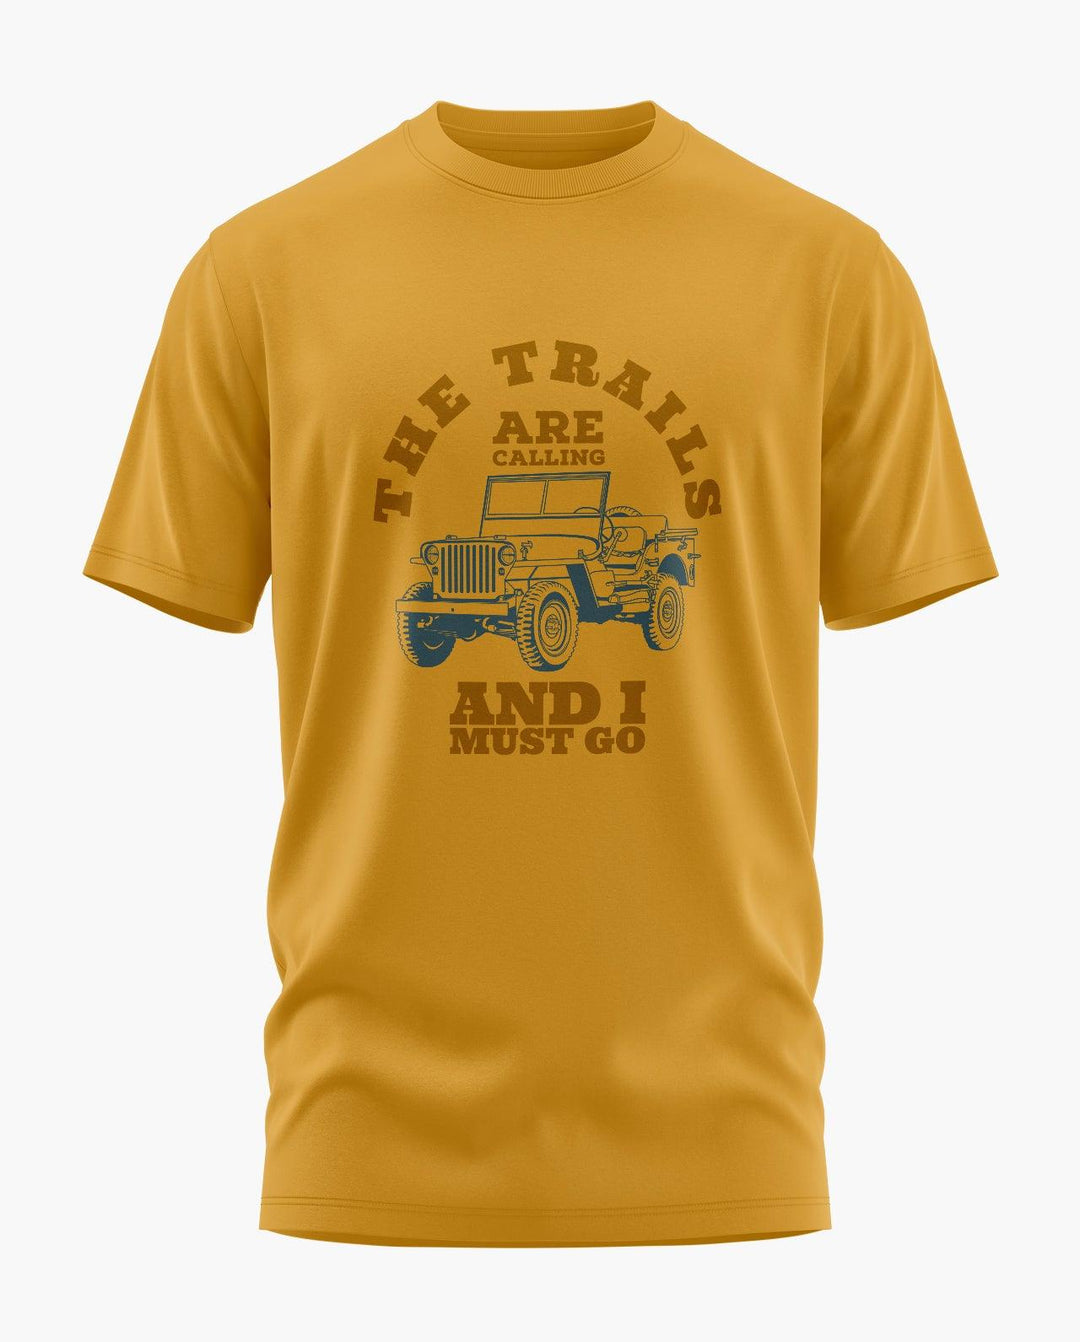 Calling Trails T-Shirt - Aero Armour